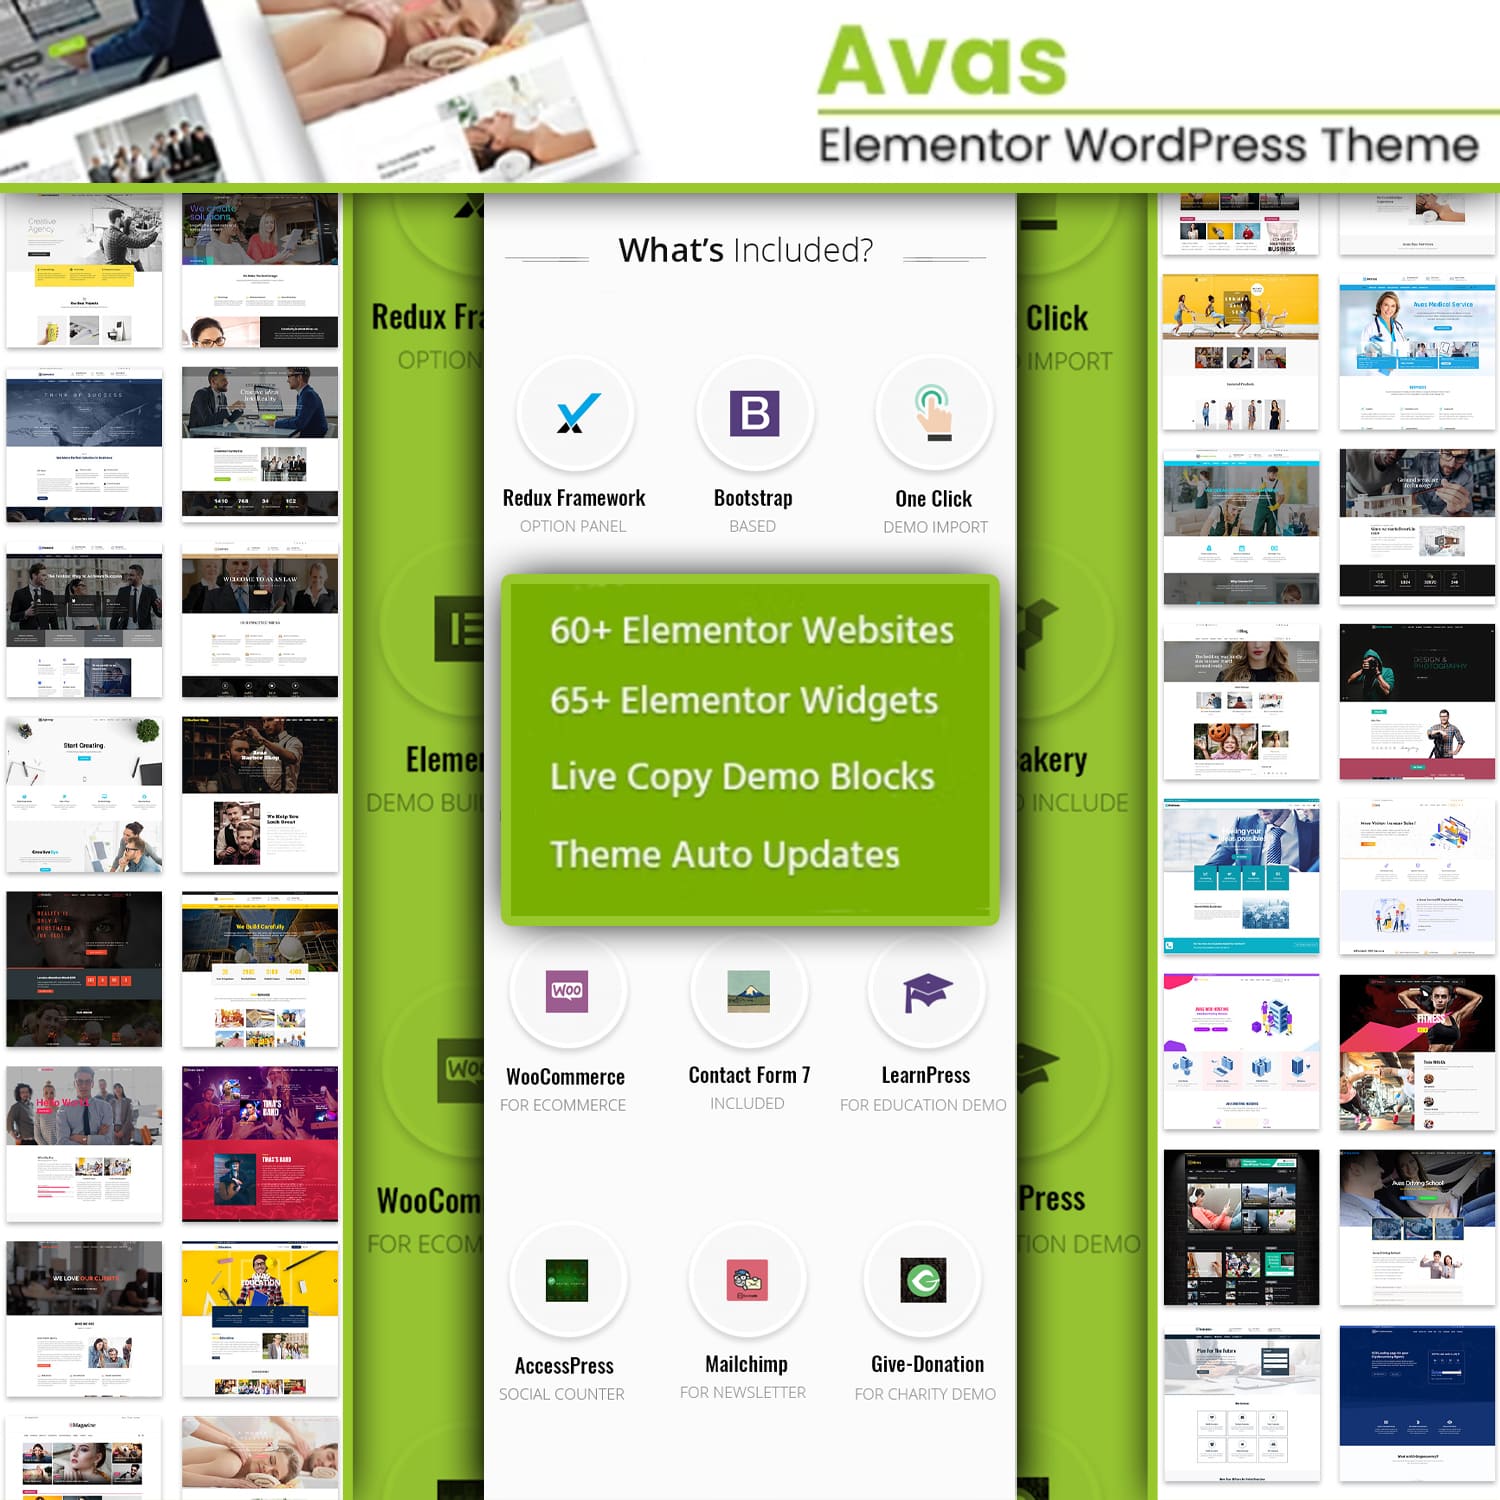 60+ elementor websites of the Avas - Elementor WordPress Theme.